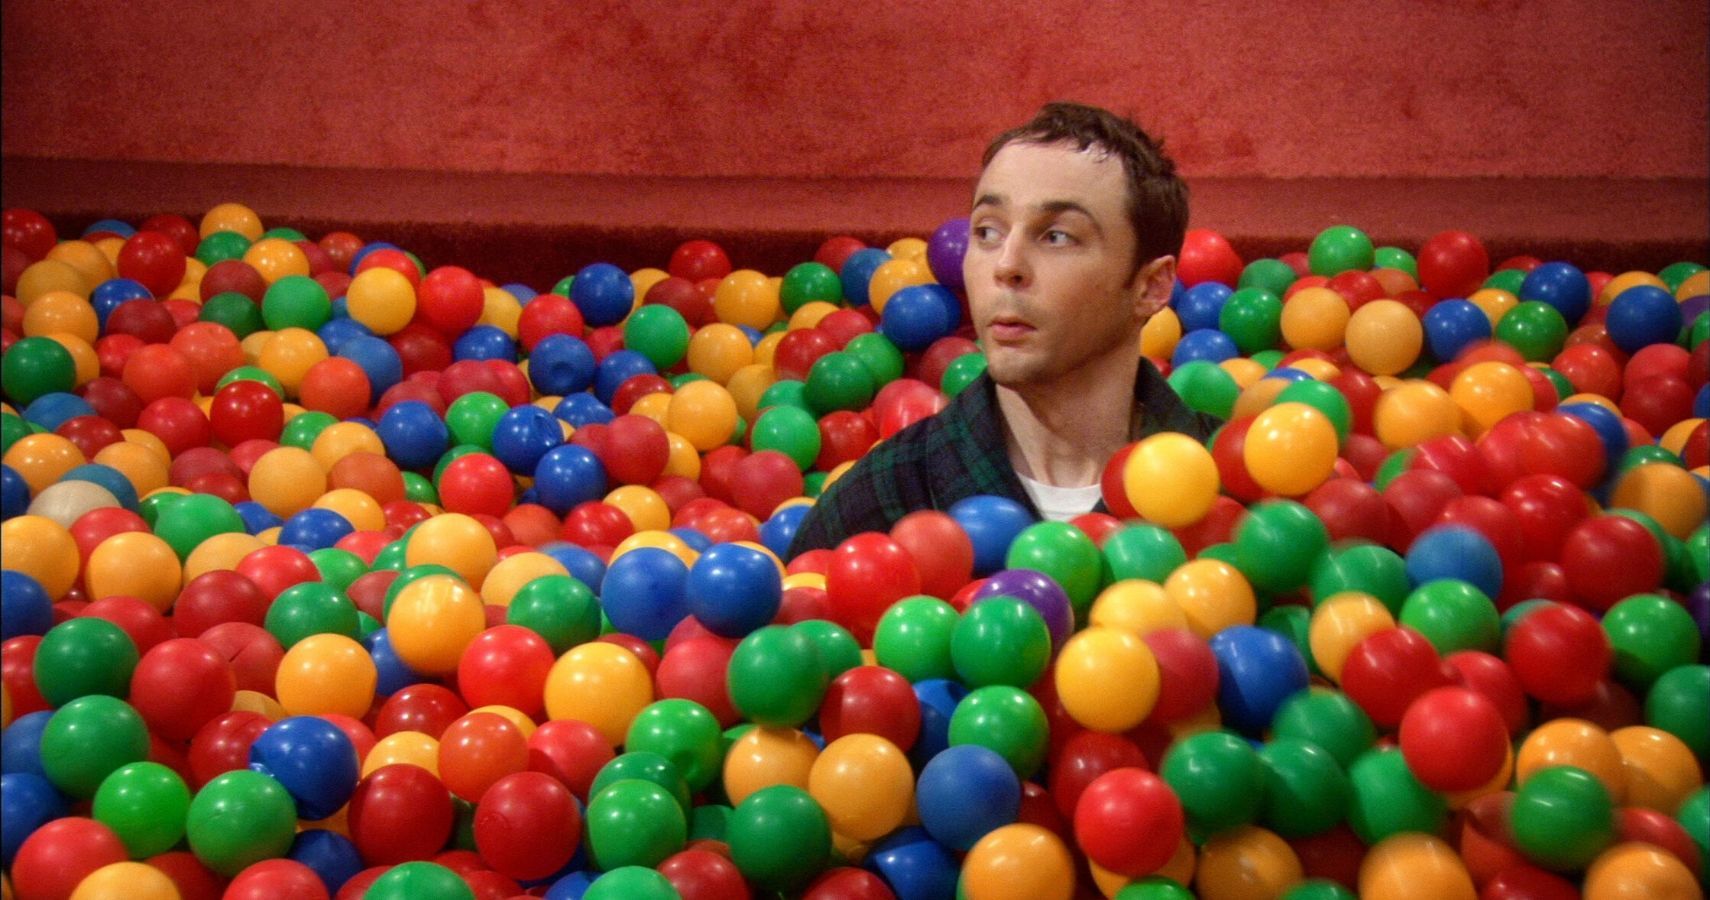 Sheldon yelling Bazinga in the ball pit on the Big Bang theory